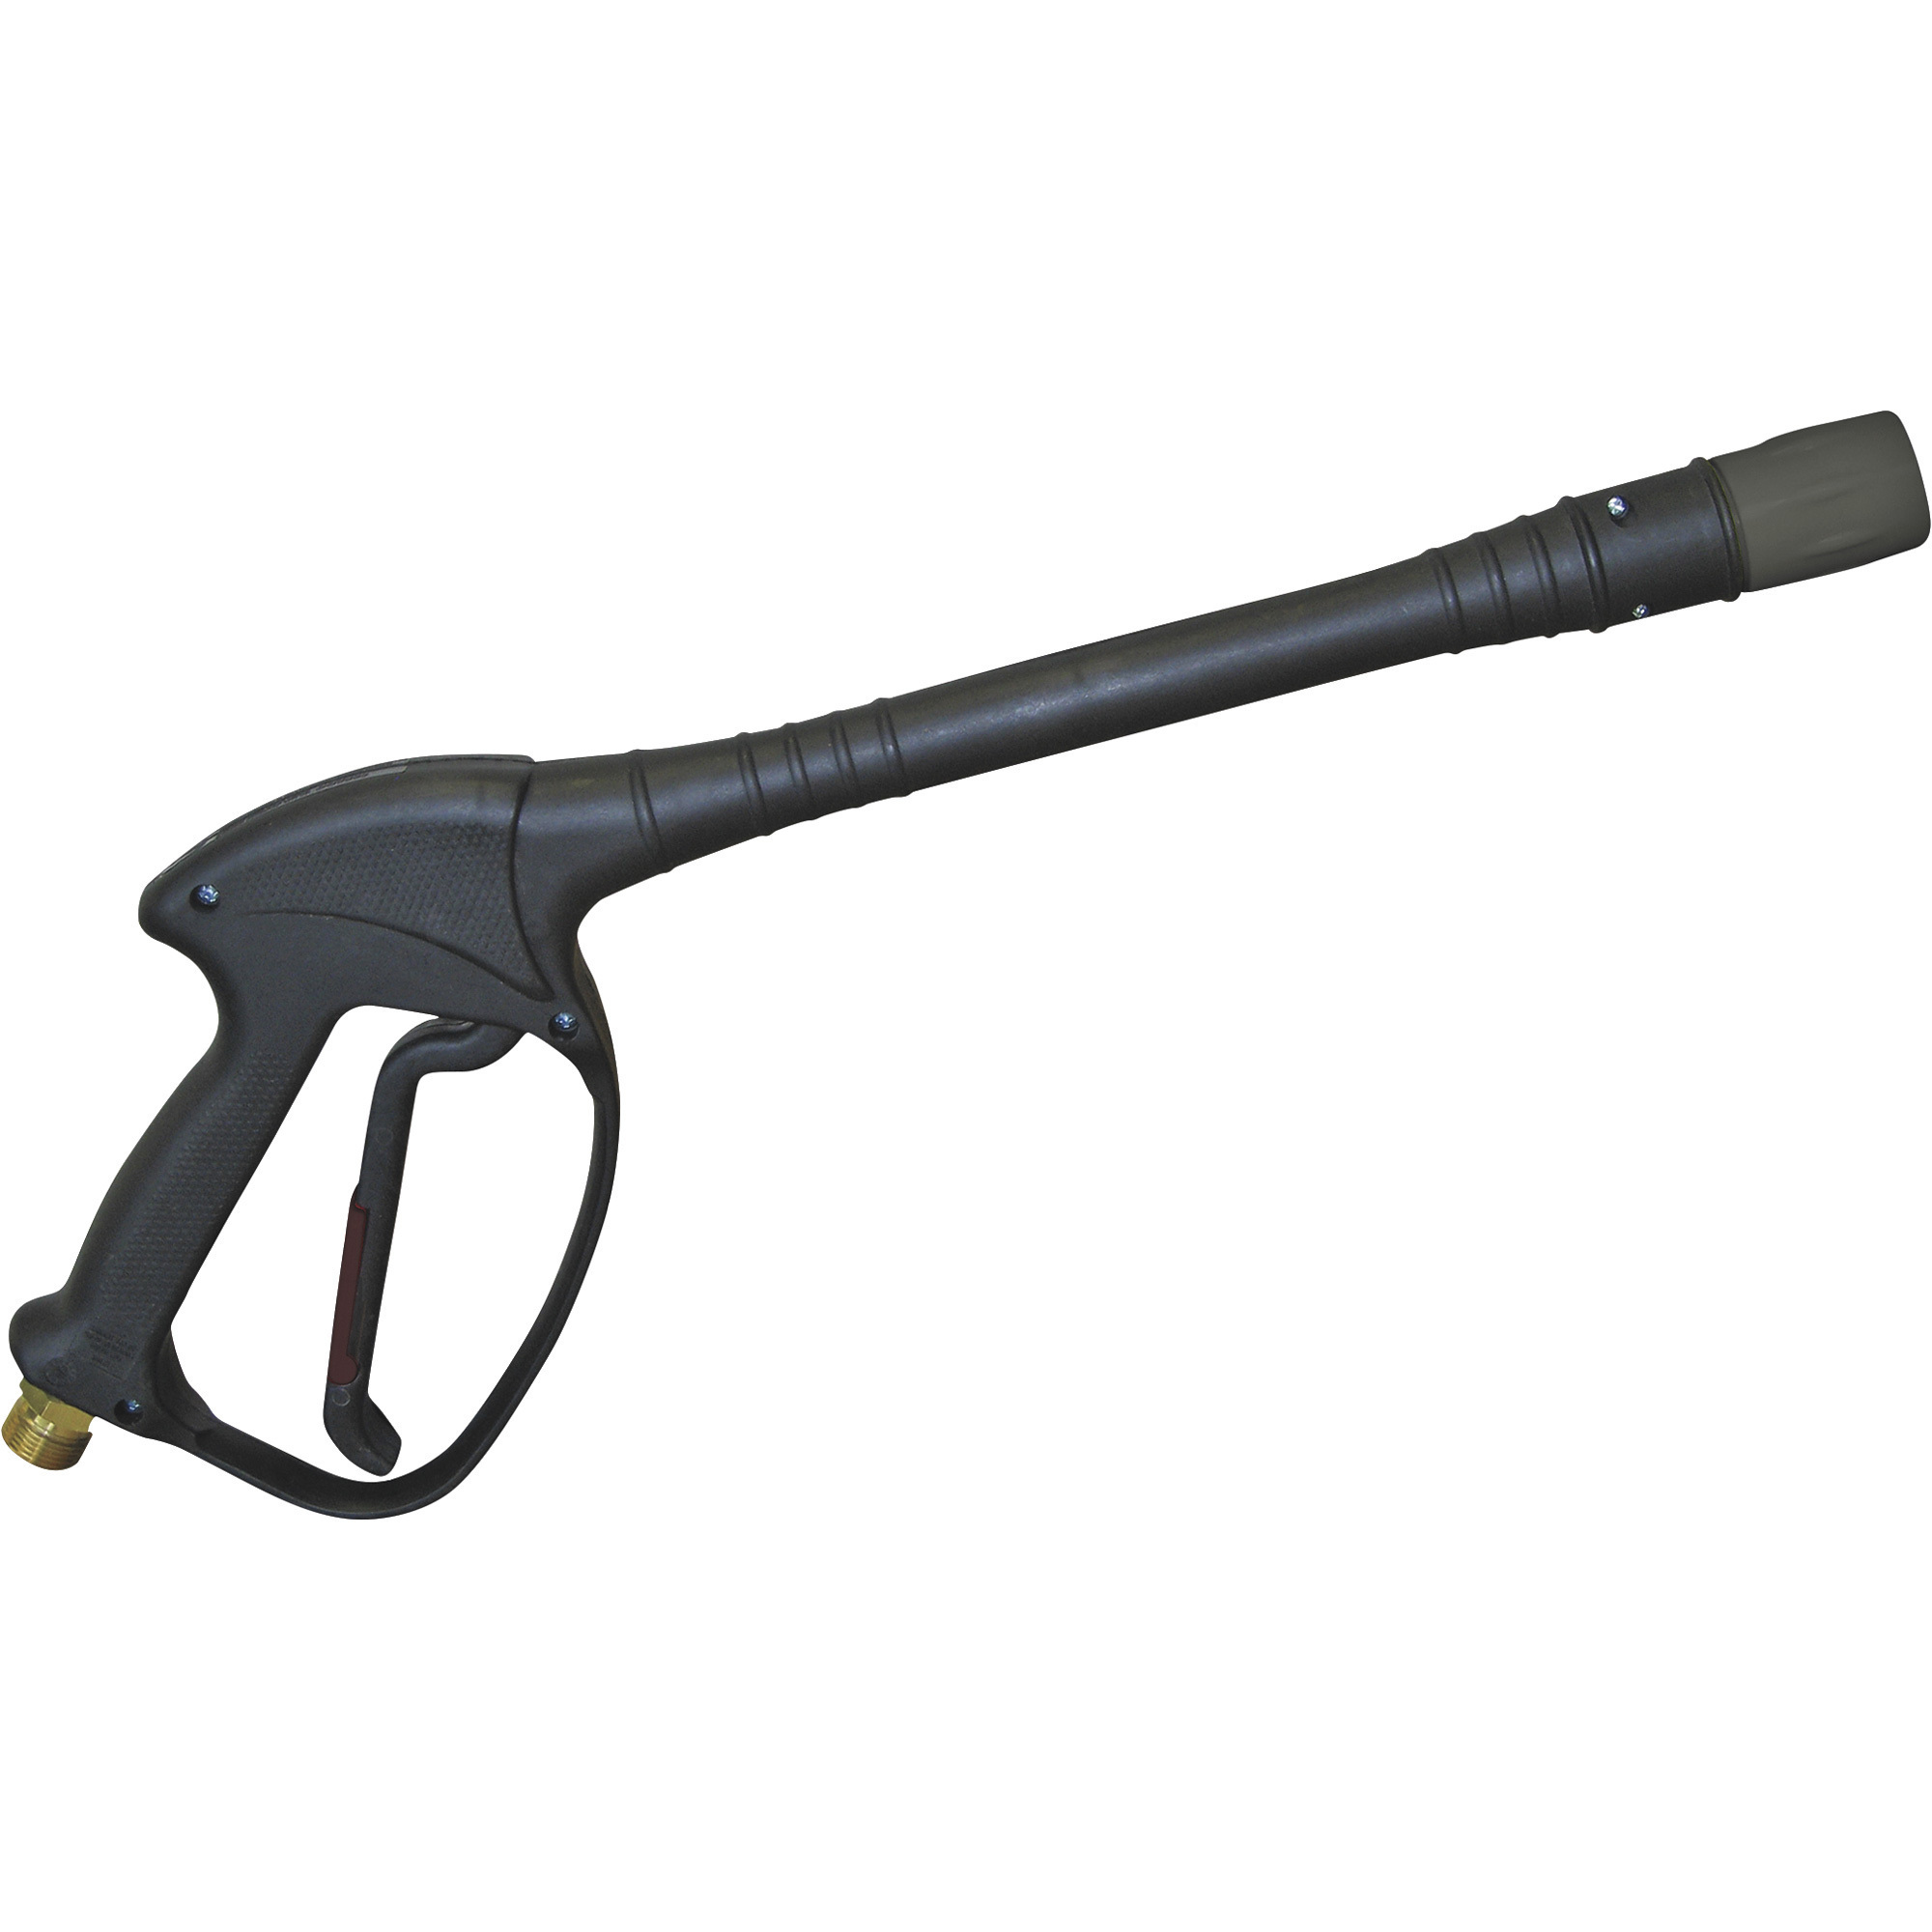 Powerhorse Pressure Washer Trigger Spray Gun/Lance Combo â 3600 PSI, 6.5 GPM